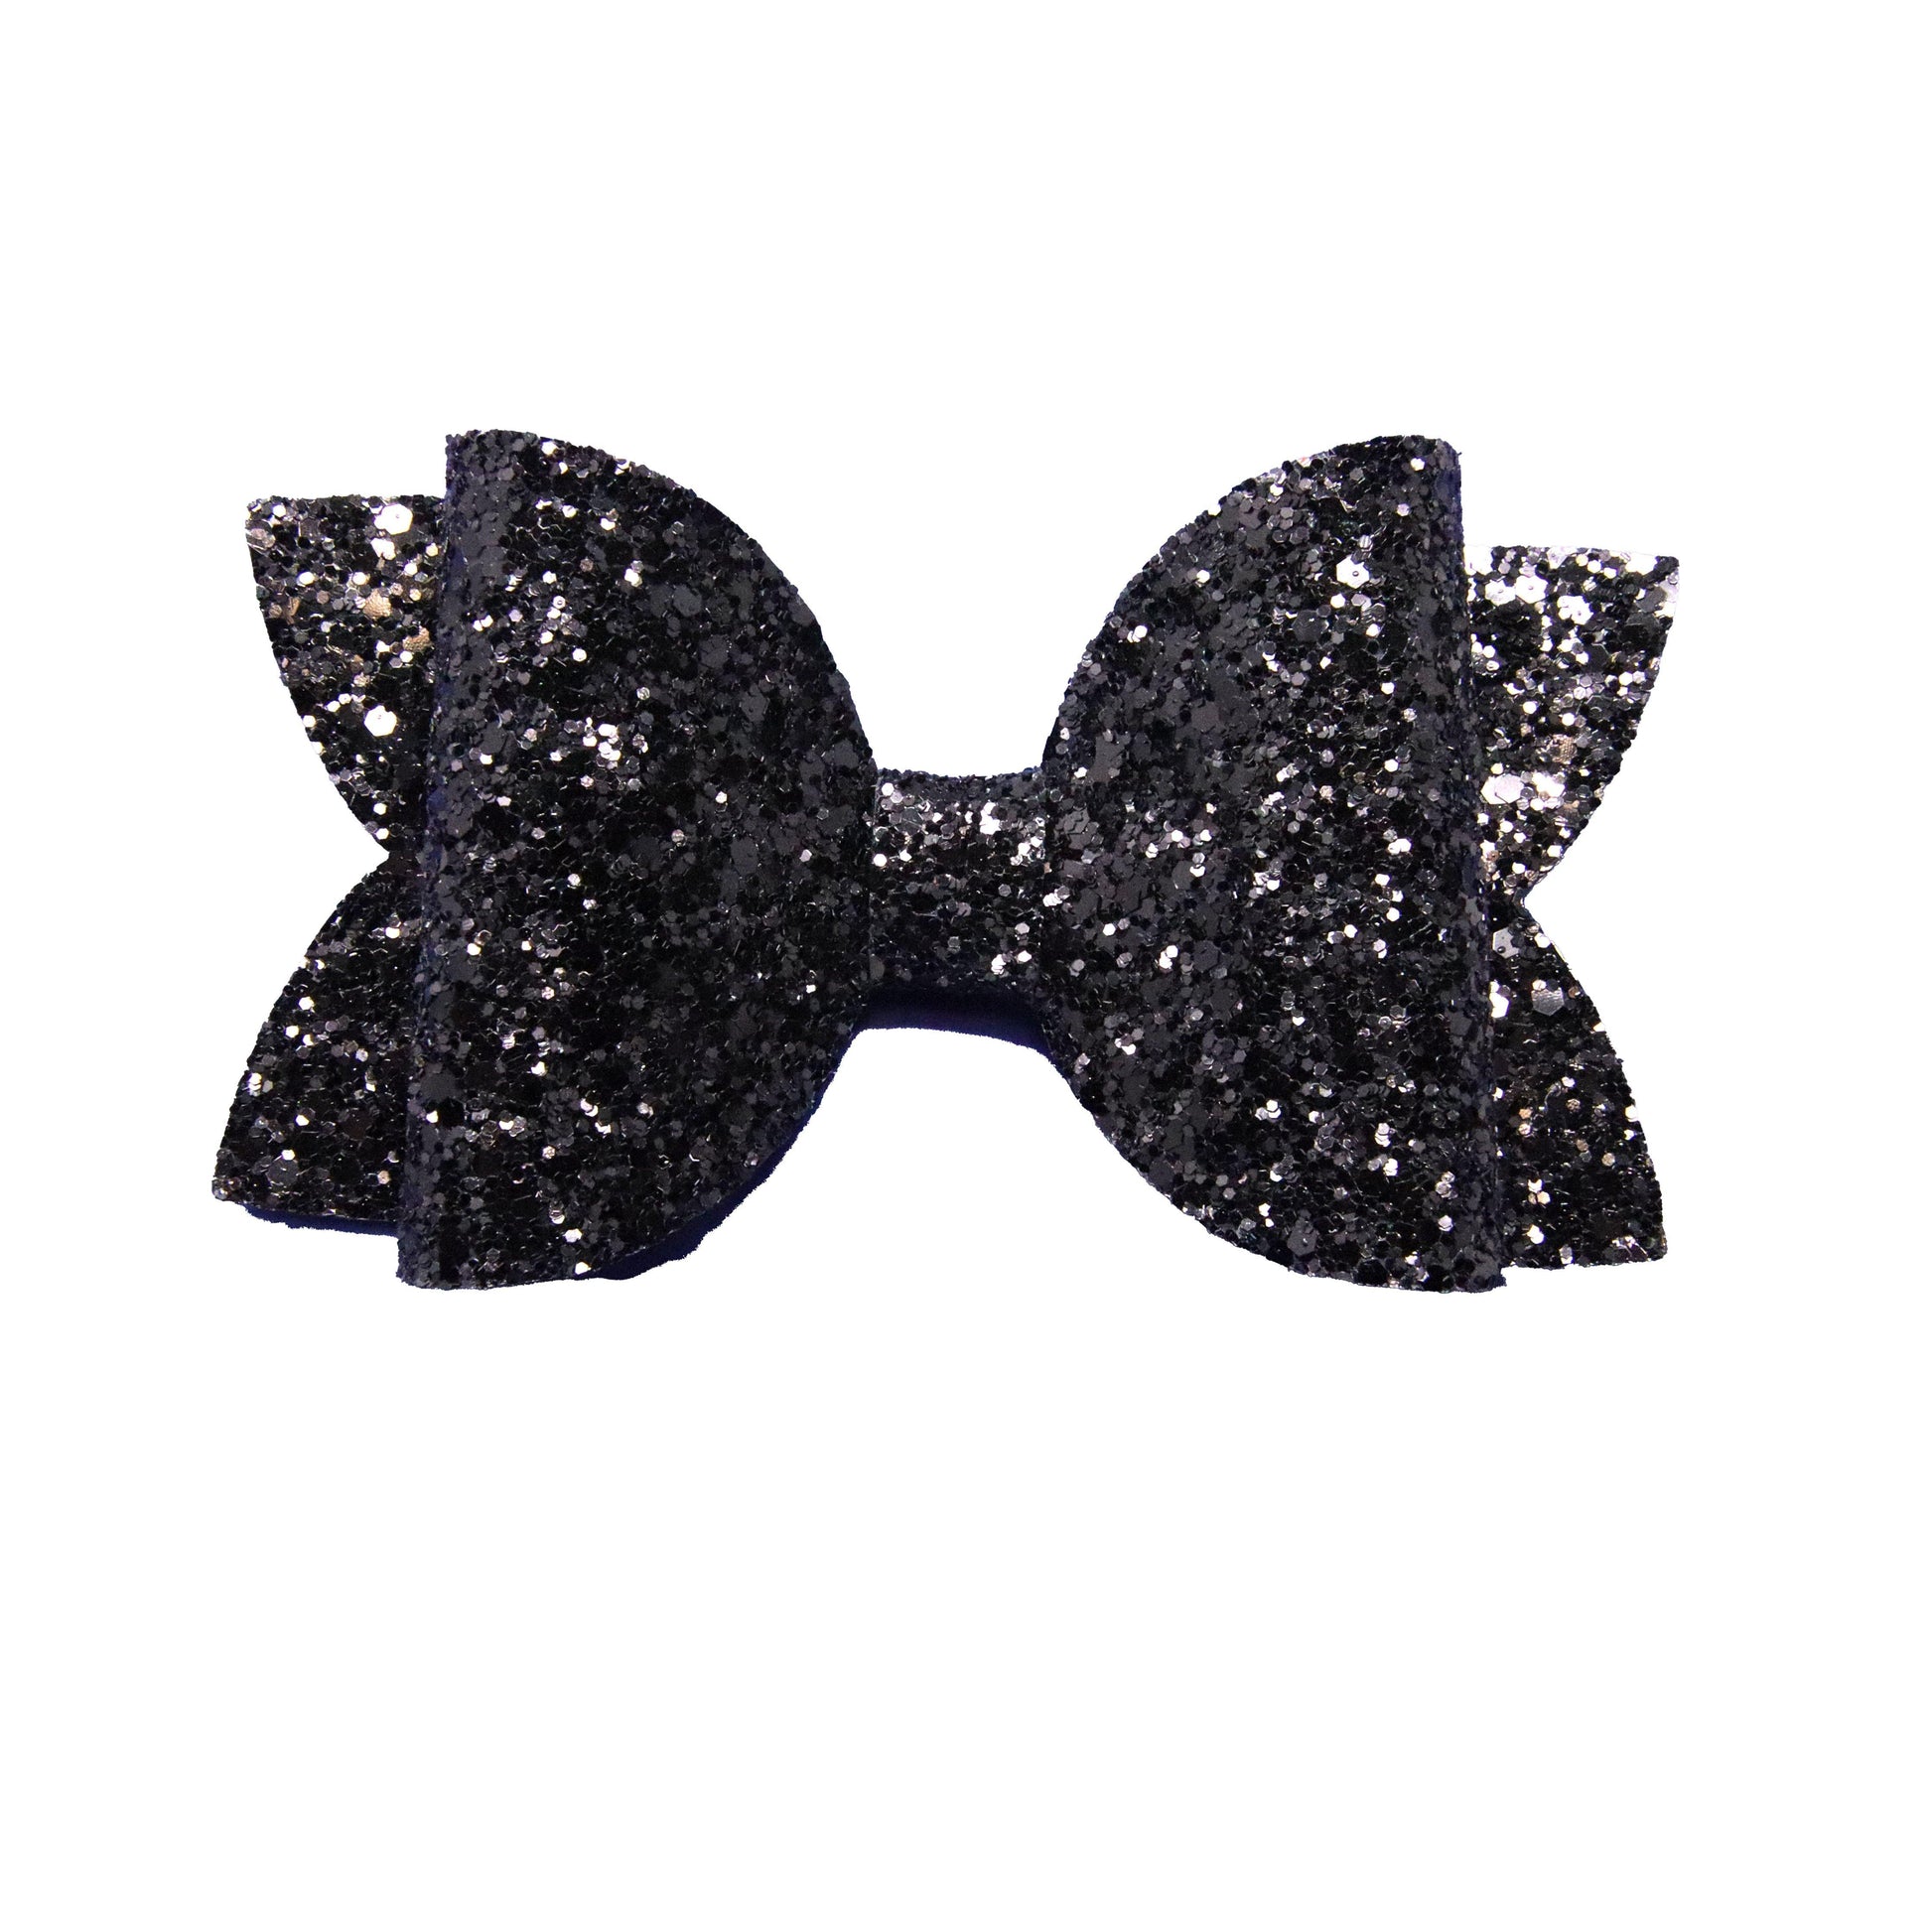 5 inch Black Glitter Diva Bow